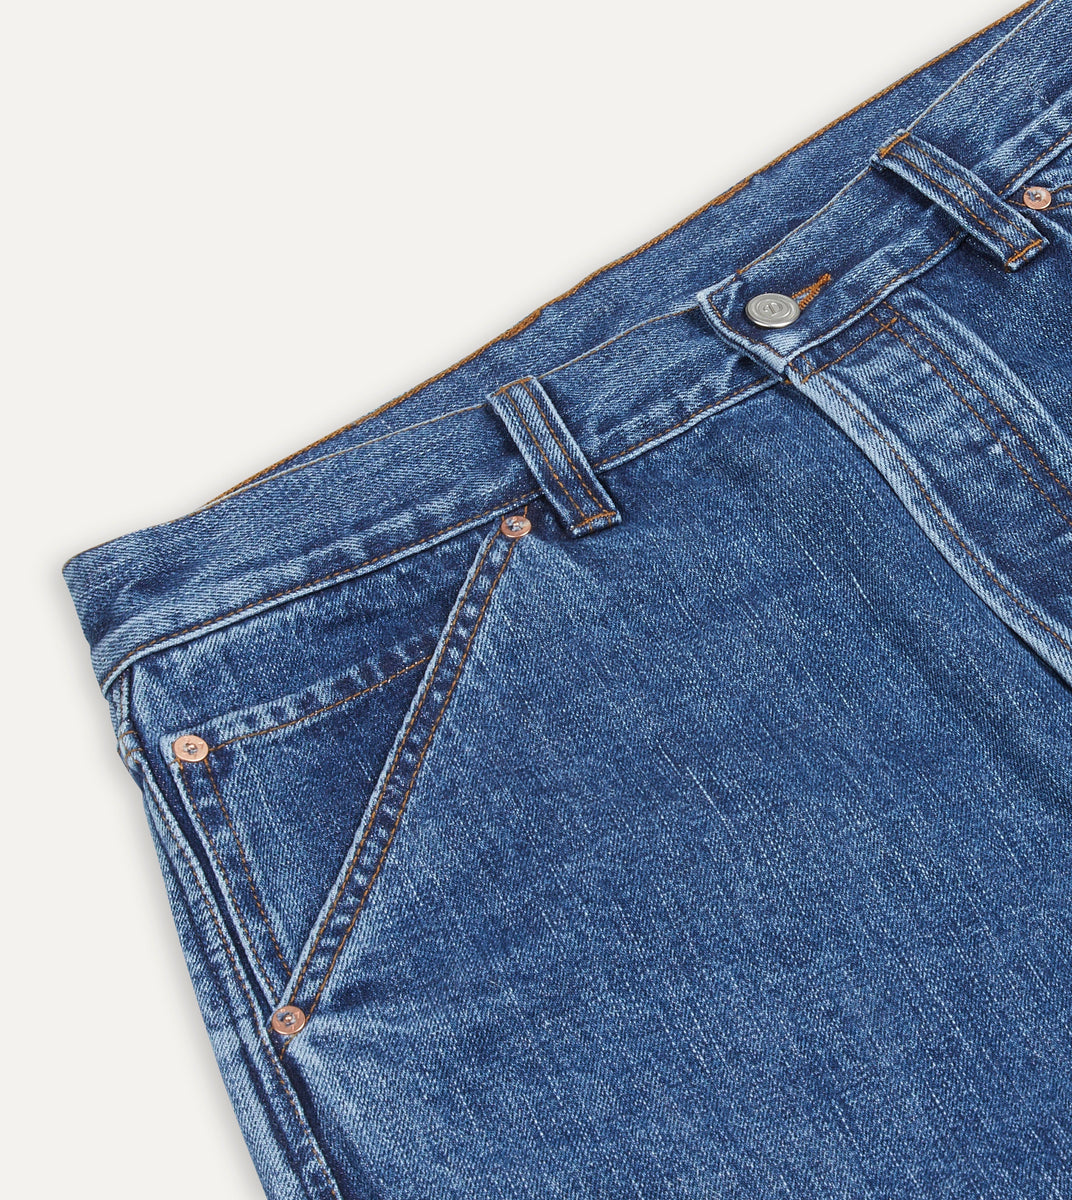 Five-Pocket Jeans 14.2oz Drakes Japanese – Denim Wash US Selvedge Bleach